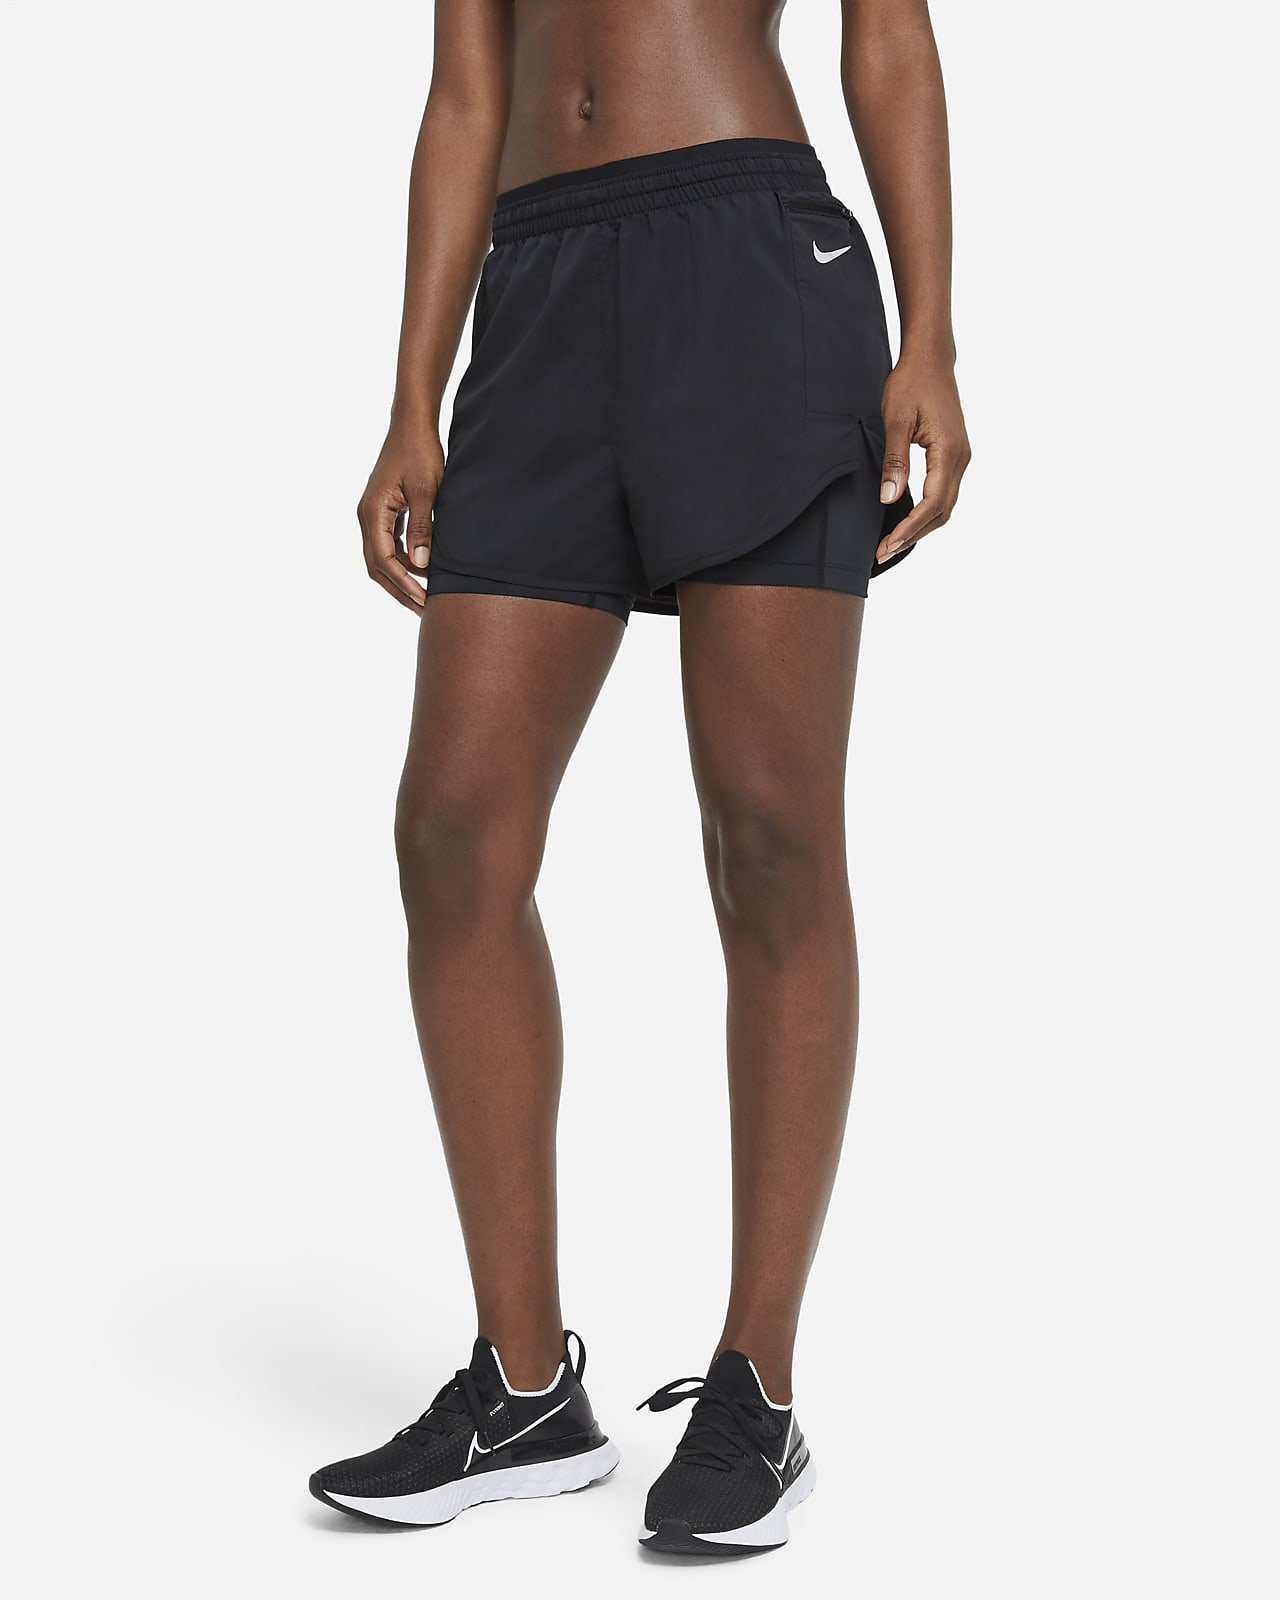 Nike Tempo Luxe 2-in-1 hardloopshorts voor dames